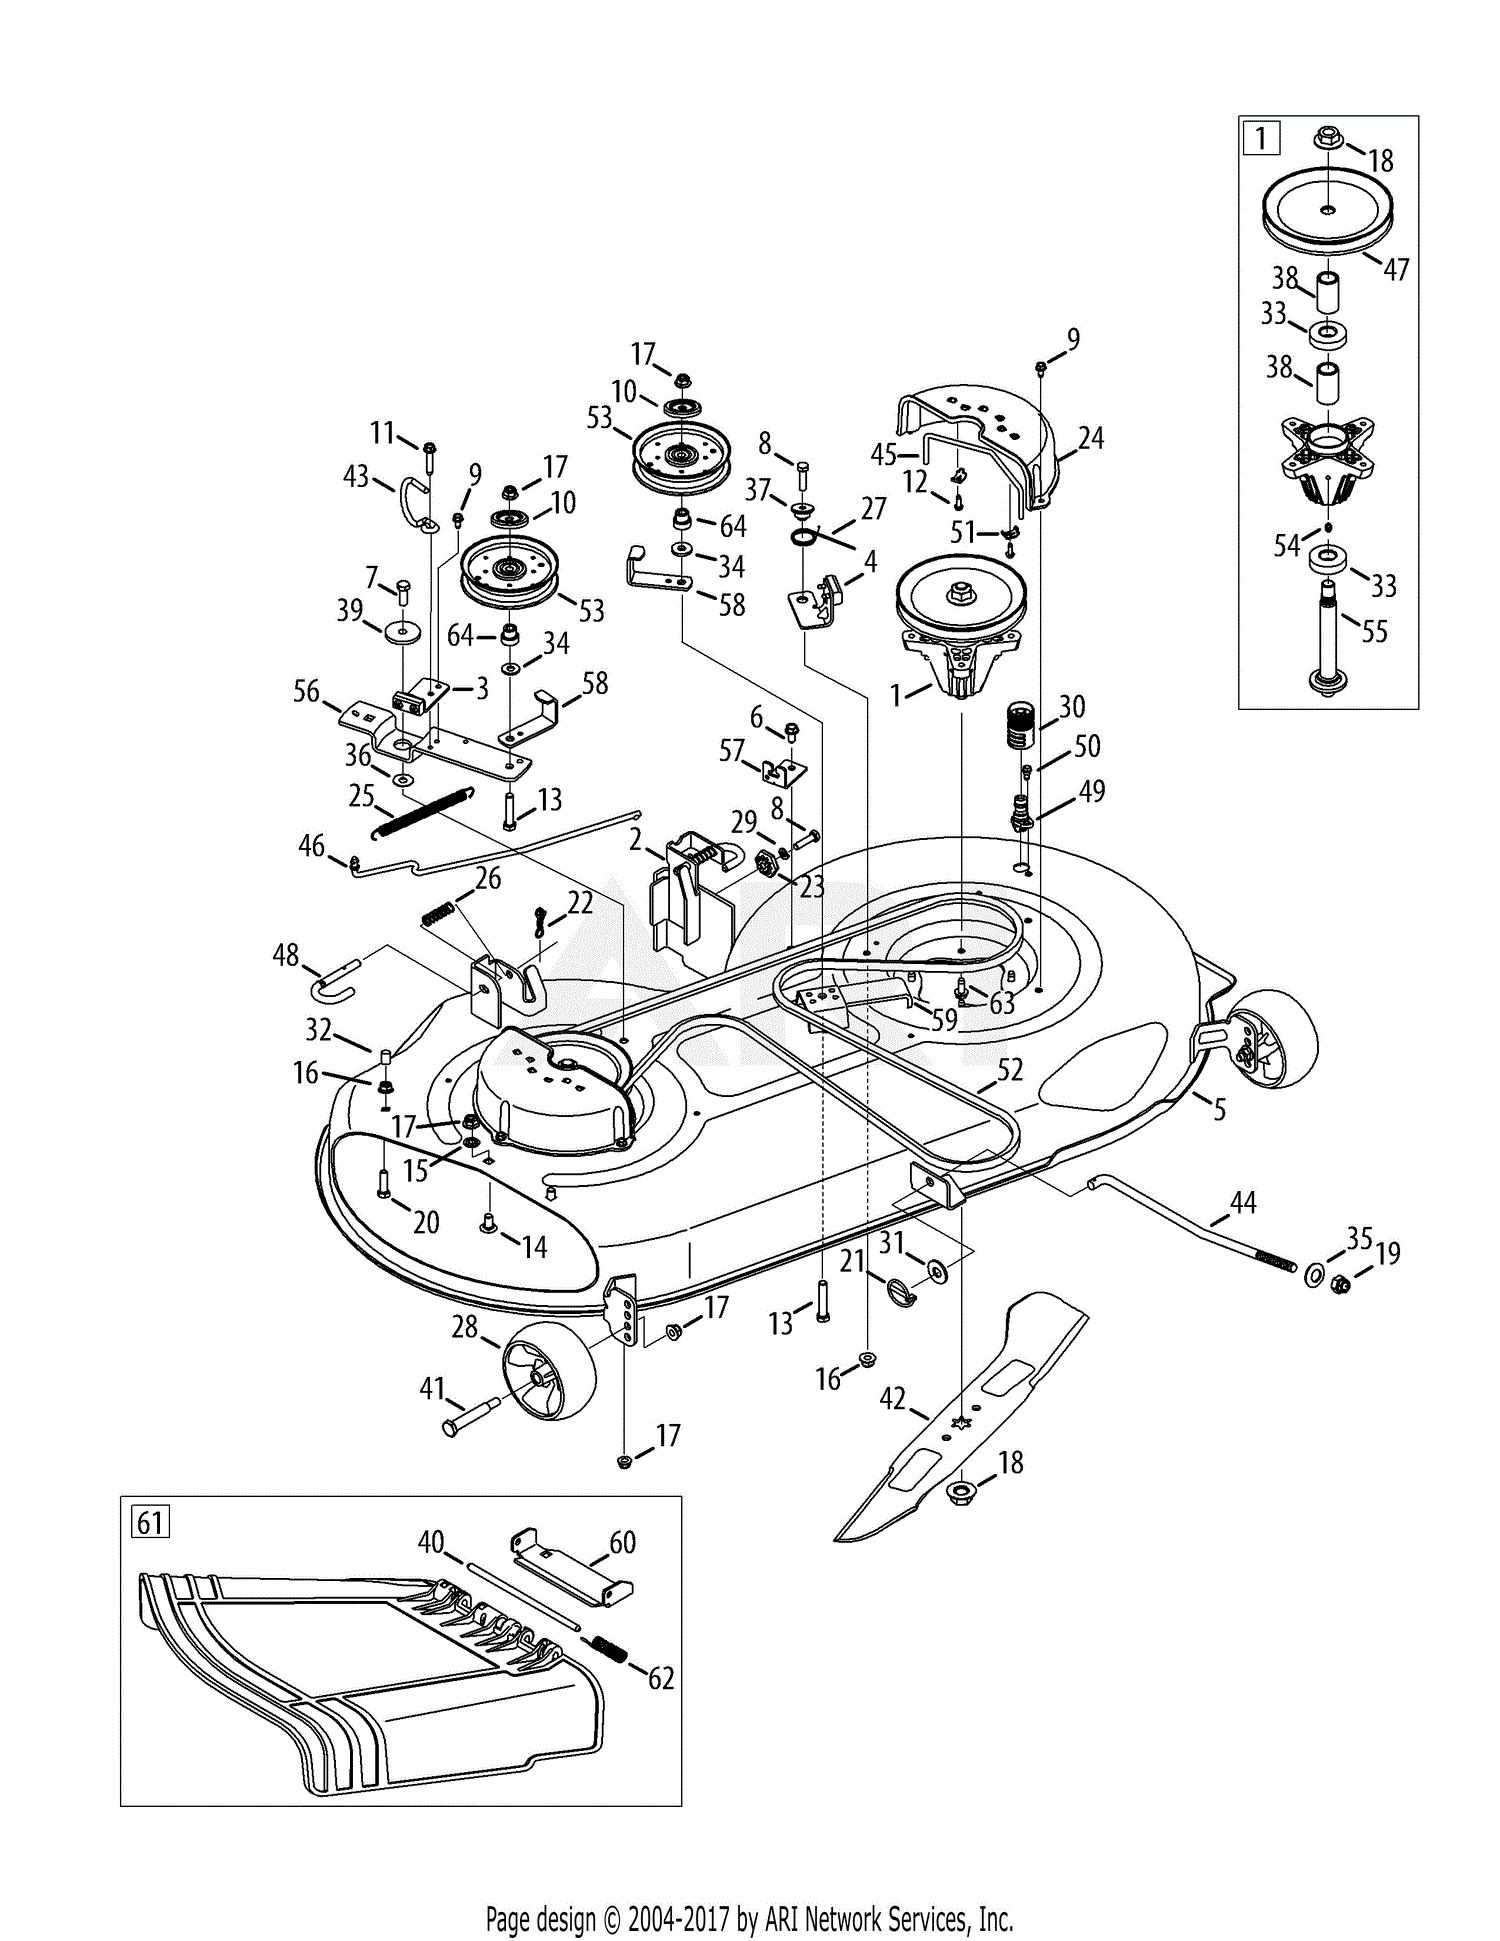 [DIAGRAM] Wiring Diagram For Troy Bilt Riding Mower - MYDIAGRAM.ONLINE